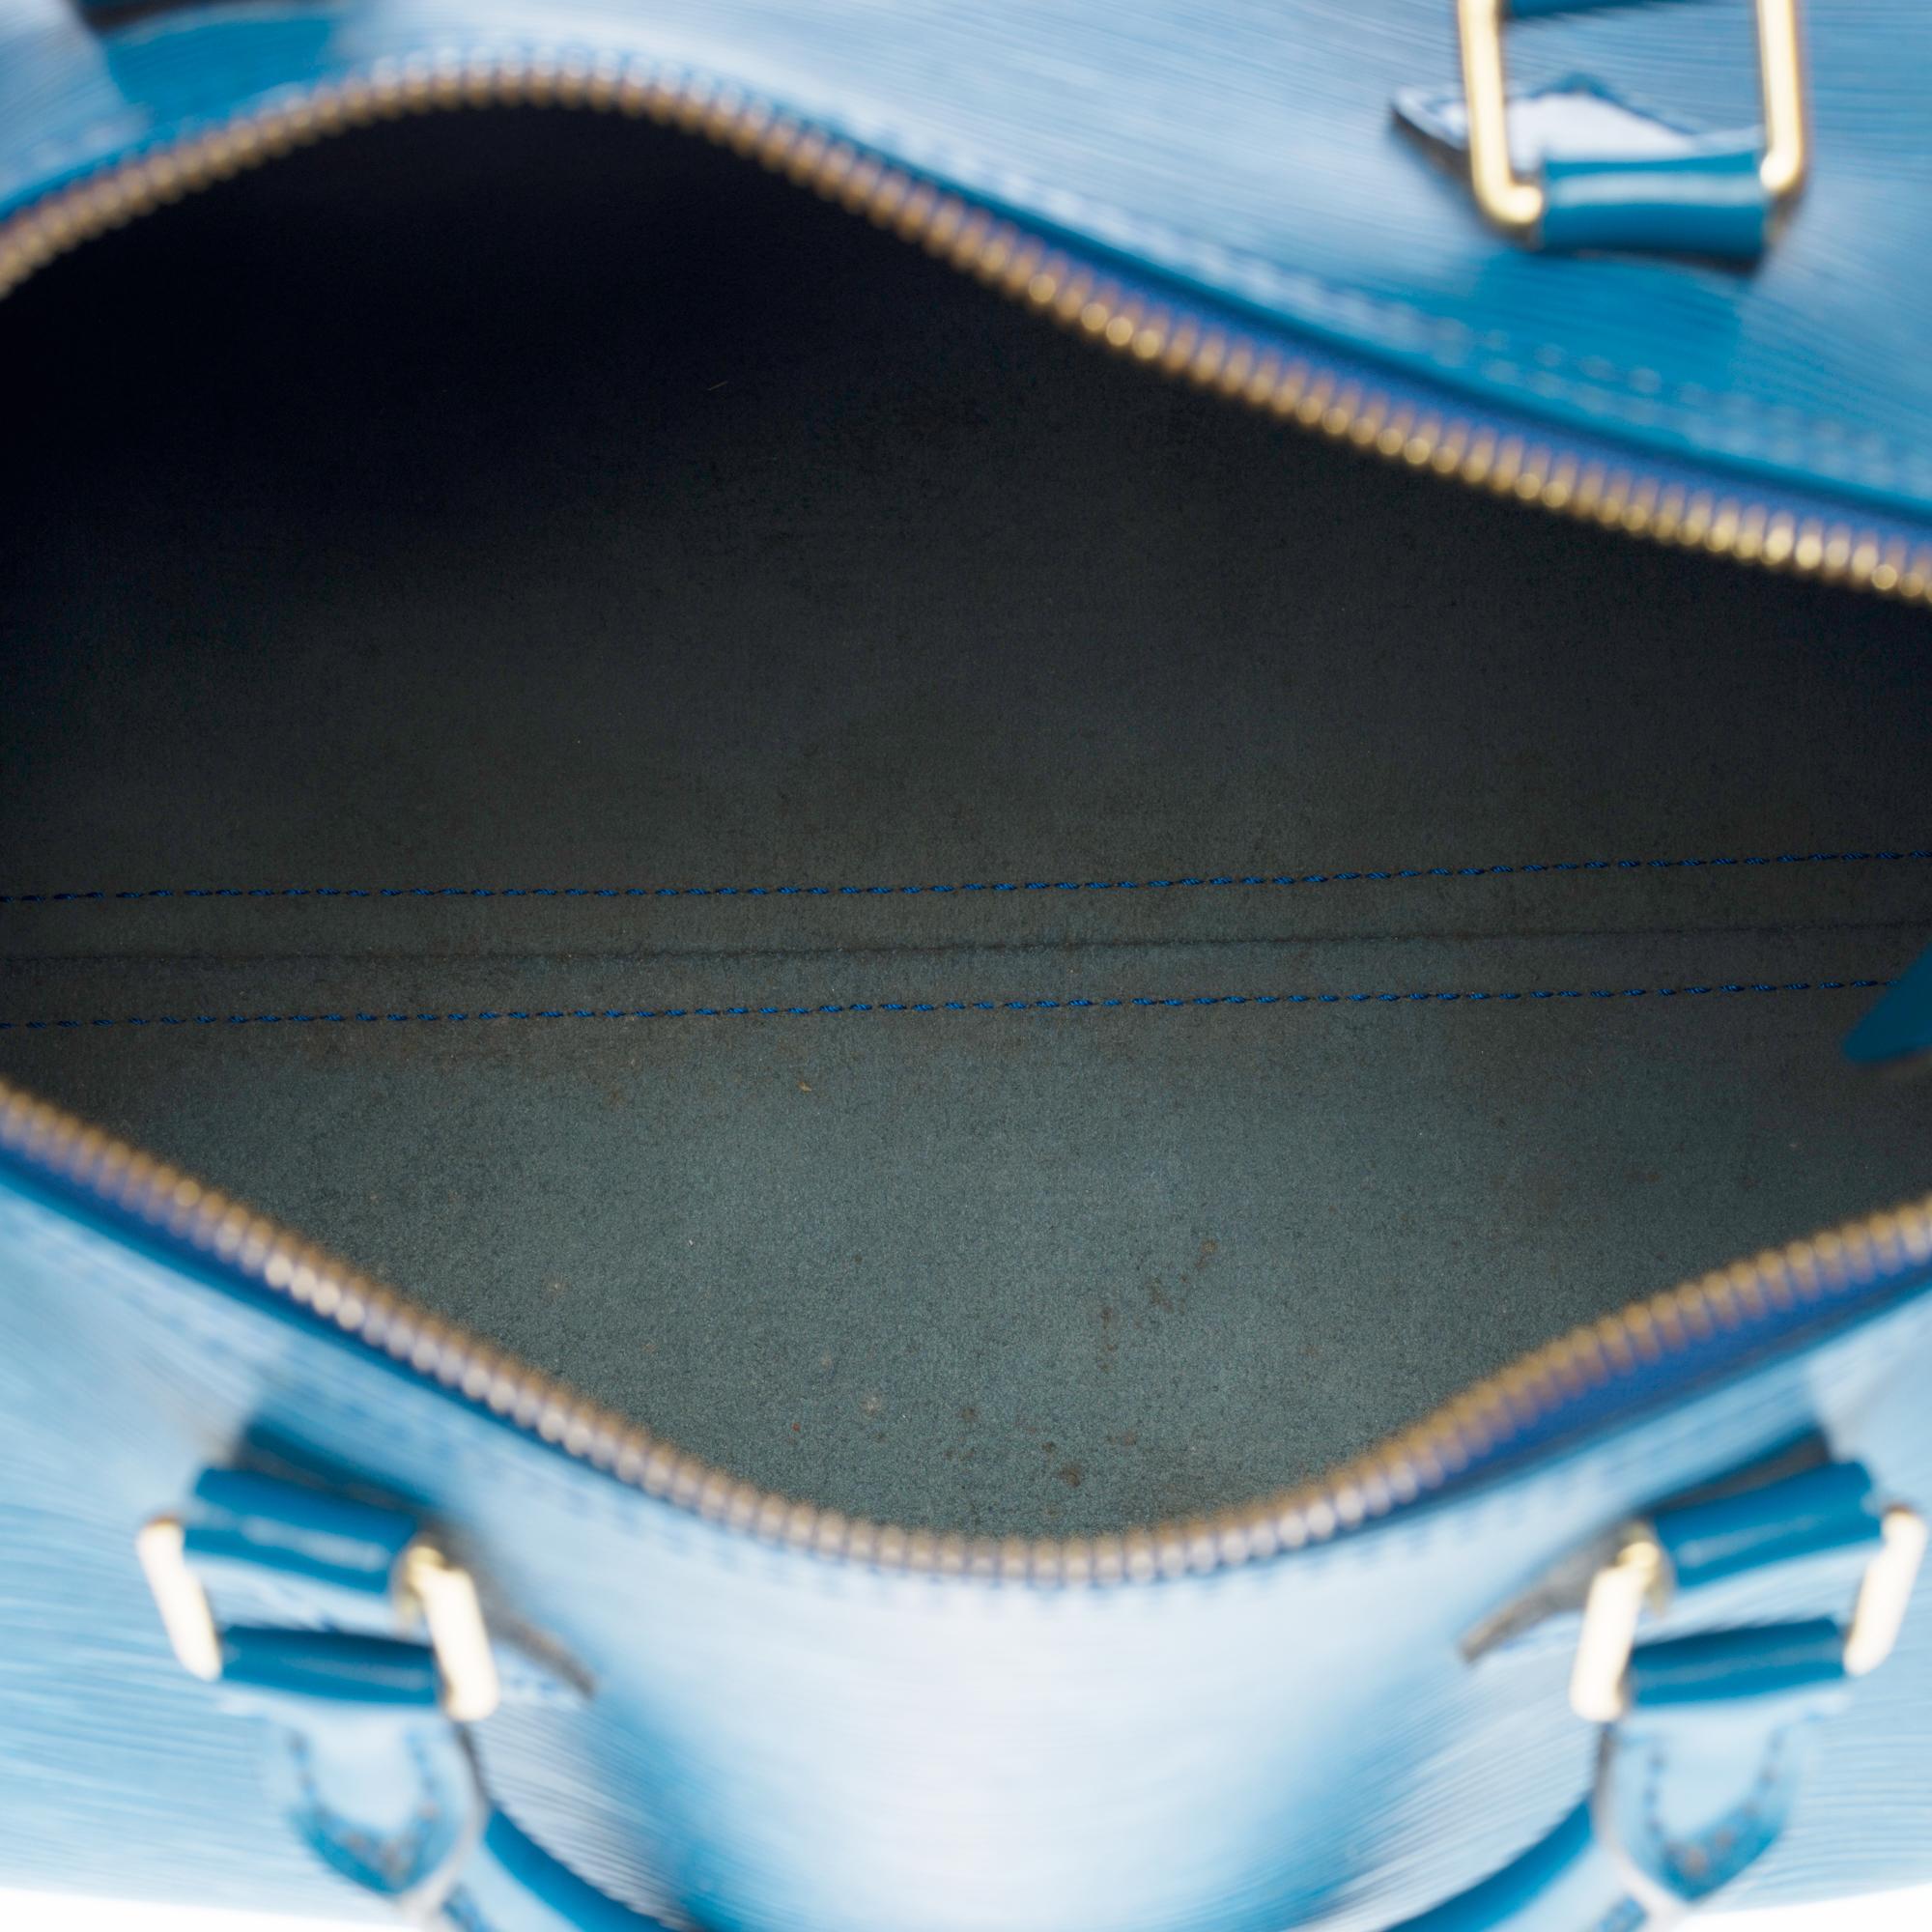 Louis Vuitton Speedy 30 handbag in blue cobalt épi leather and gold hardware In Good Condition In Paris, IDF